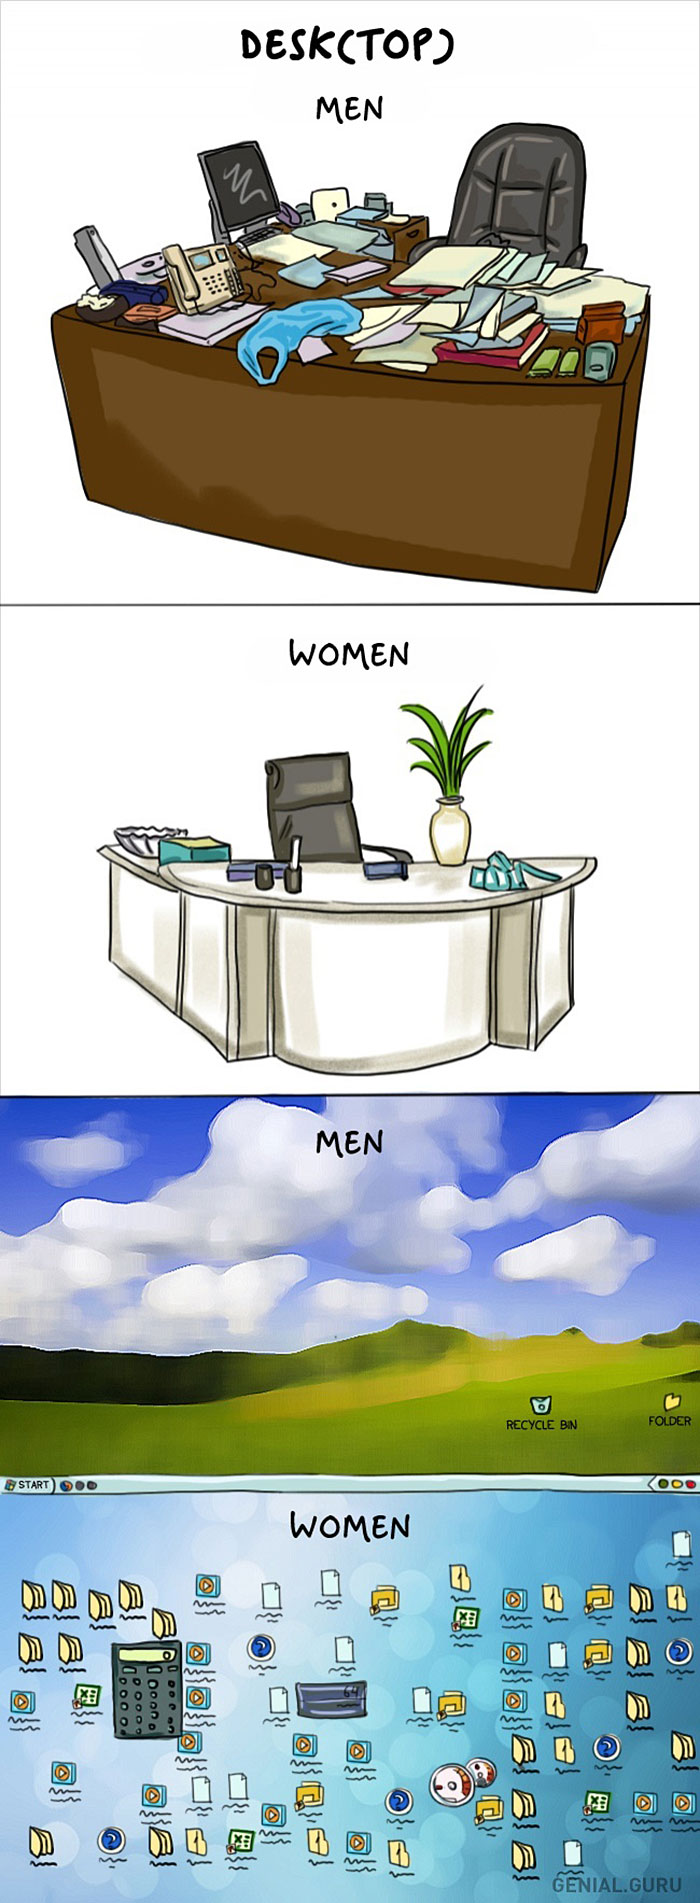 men-women-differences-comic-bright-side-151__700